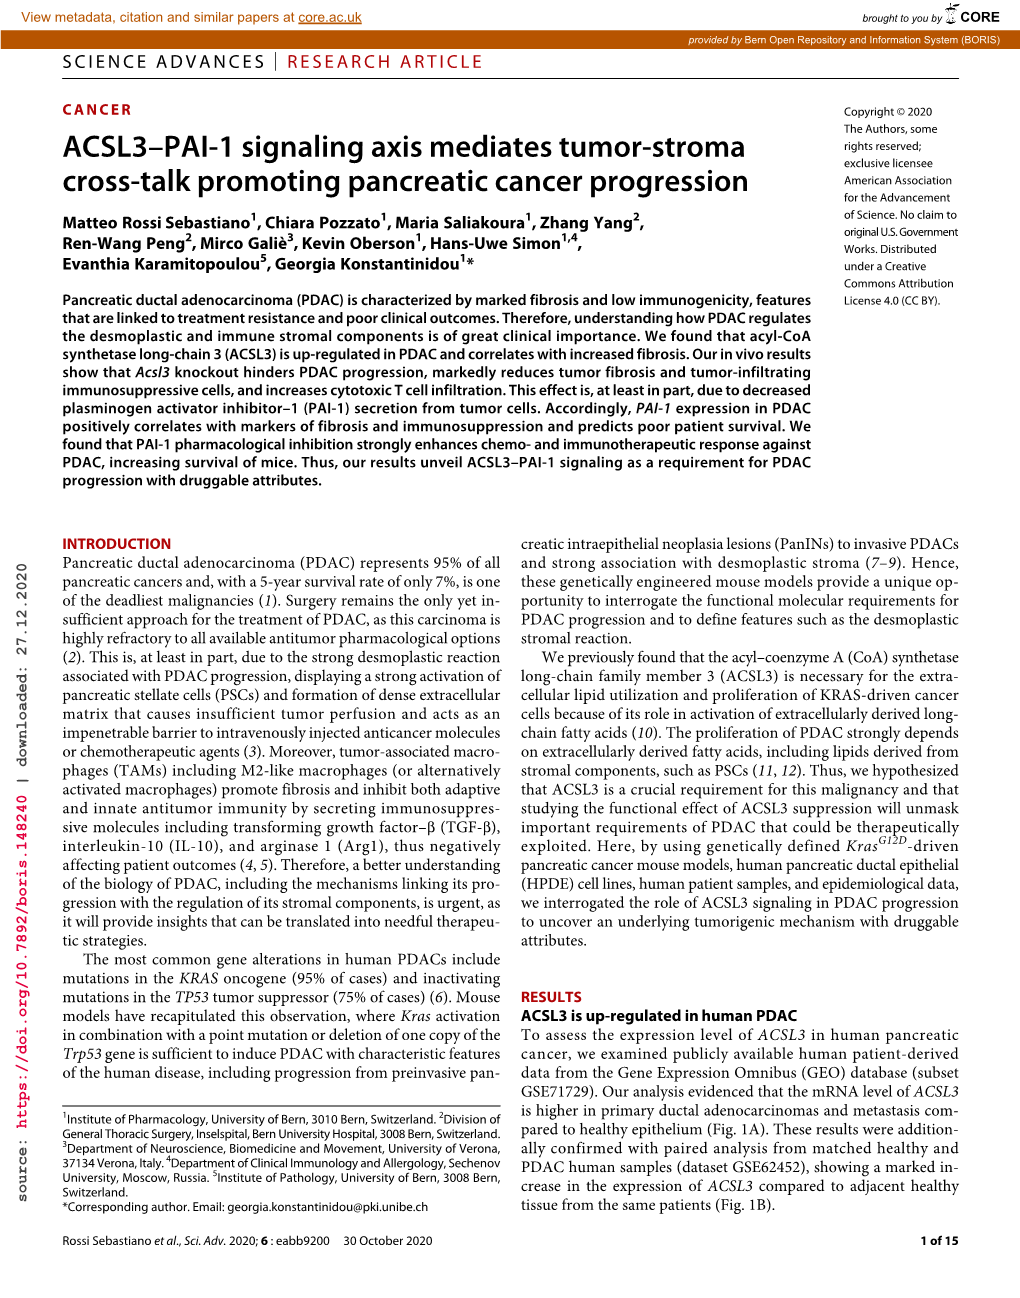 ACSL3–PAI-1 Signaling Axis Mediates Tumor-Stroma Cross-Talk Promoting Pancreatic Cancer Progression